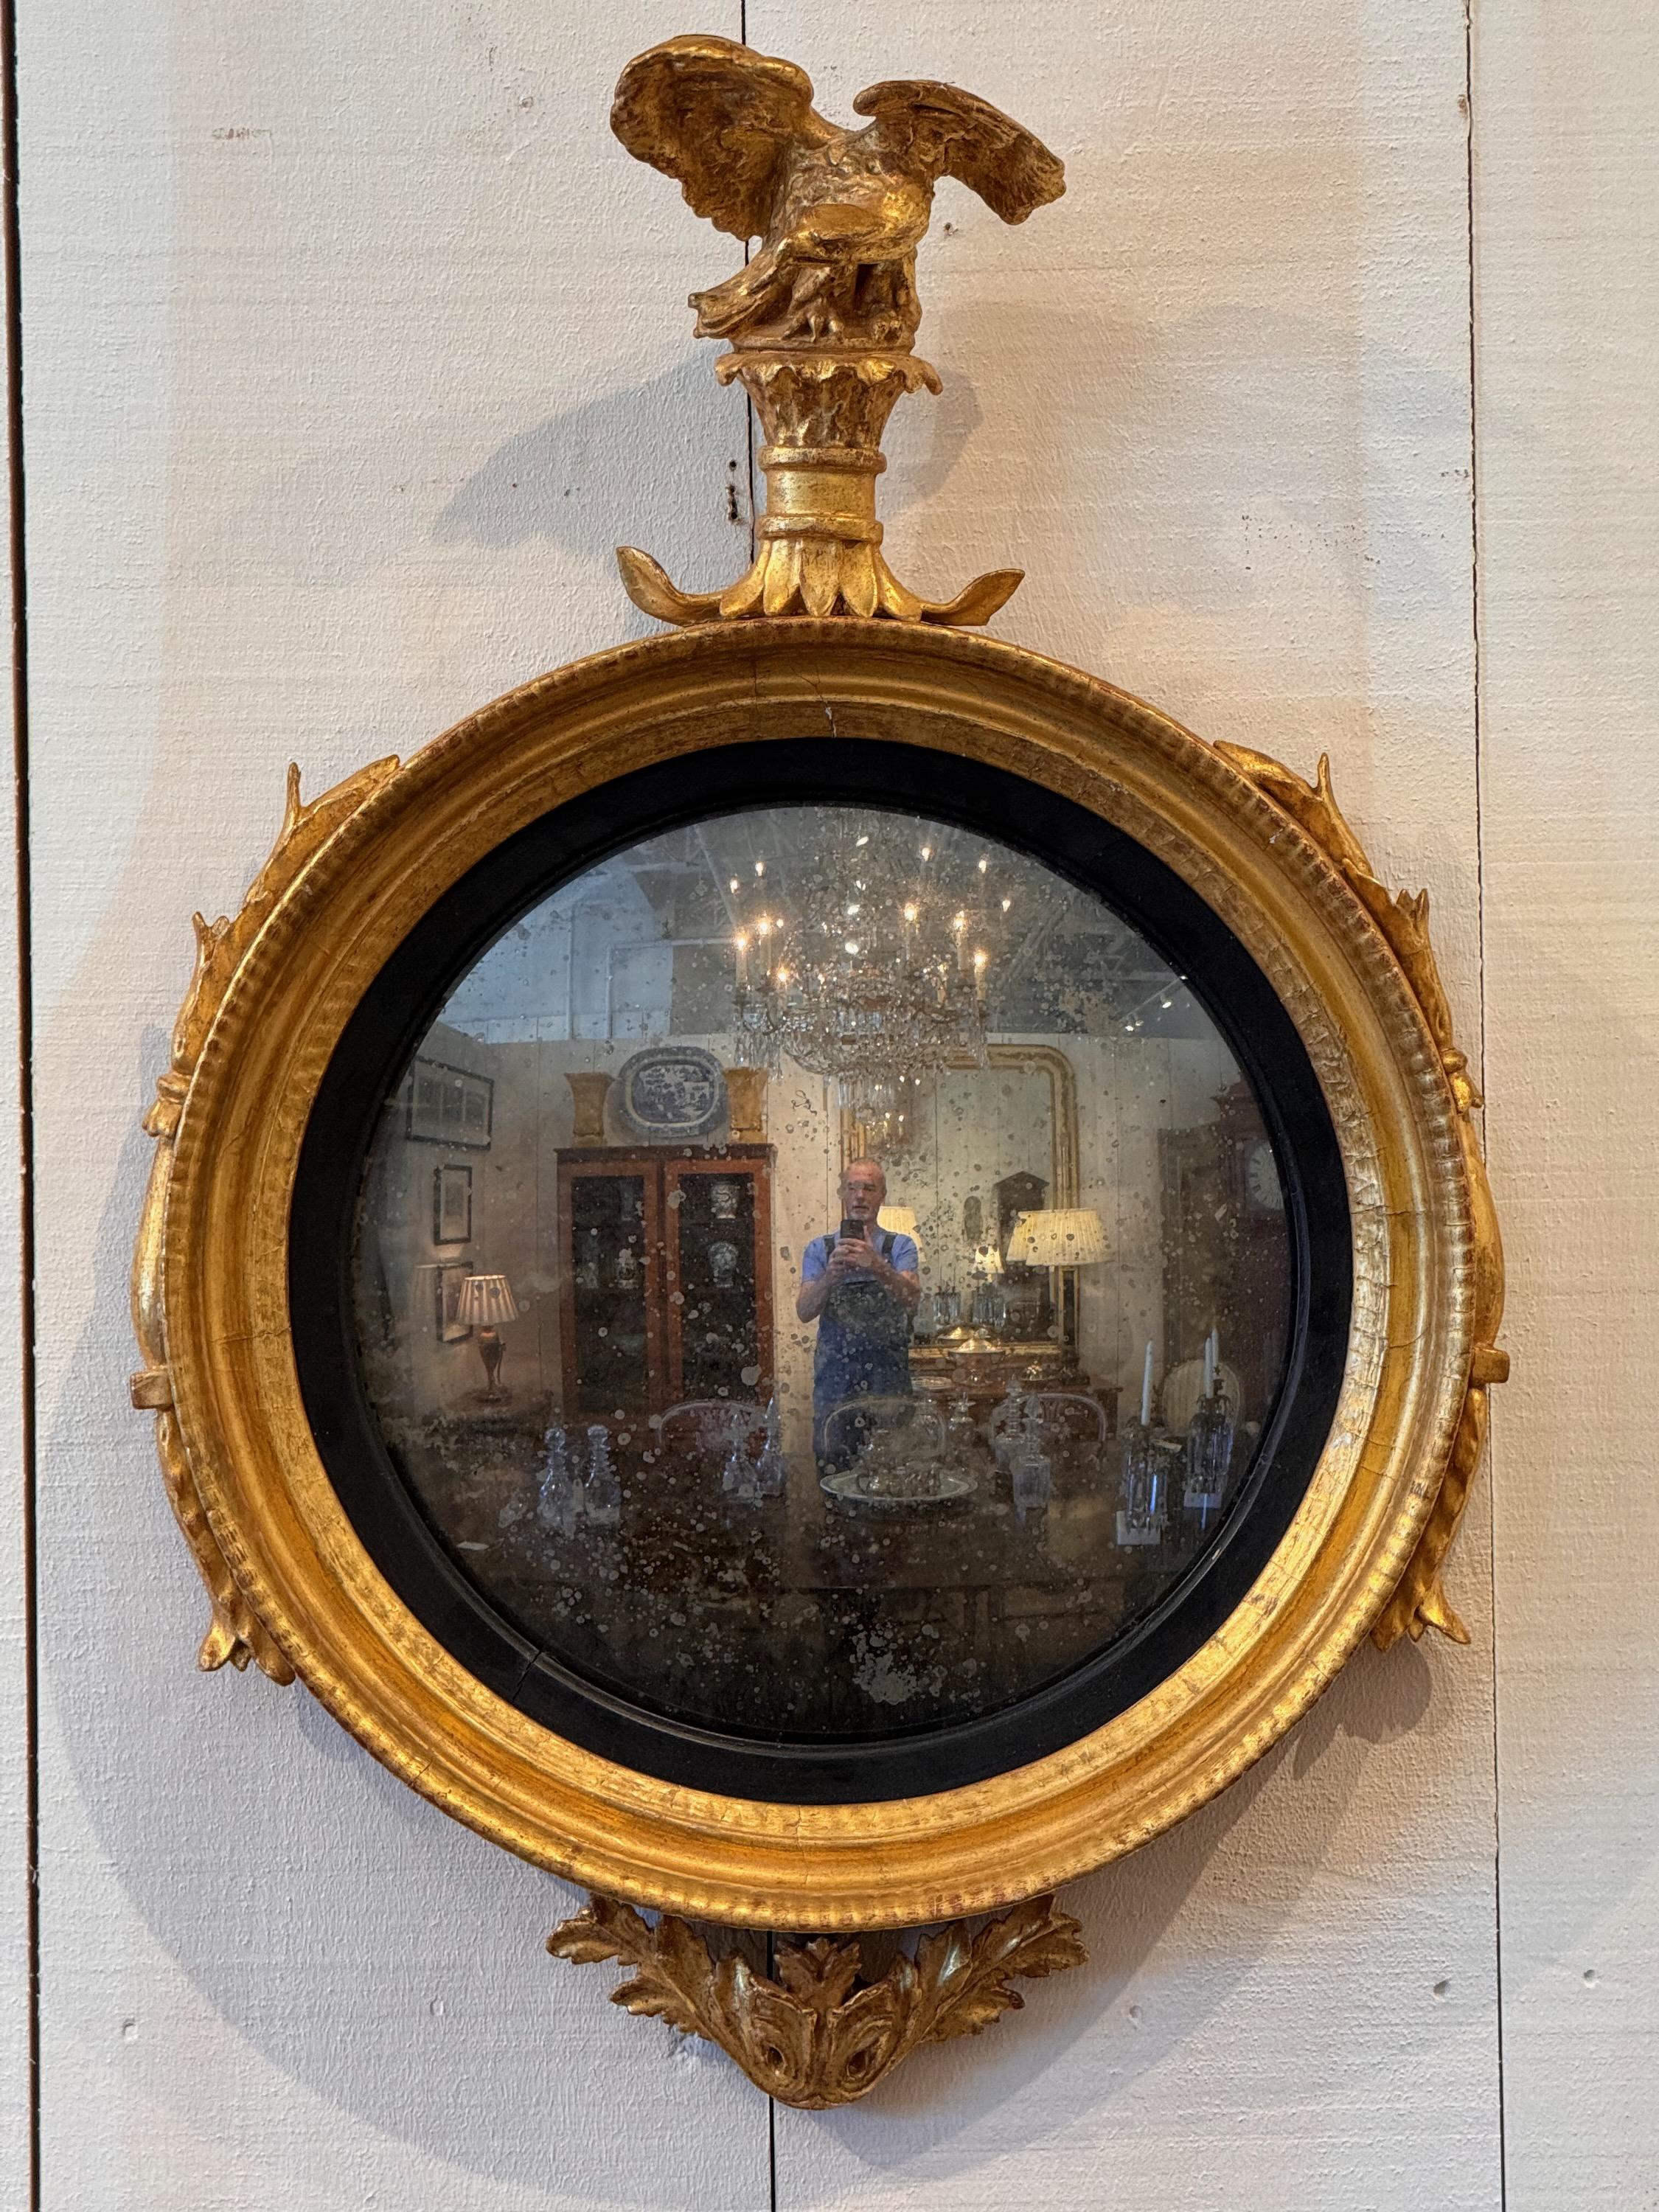 A fine example of a gilded bullseye mirror. Great gilding.